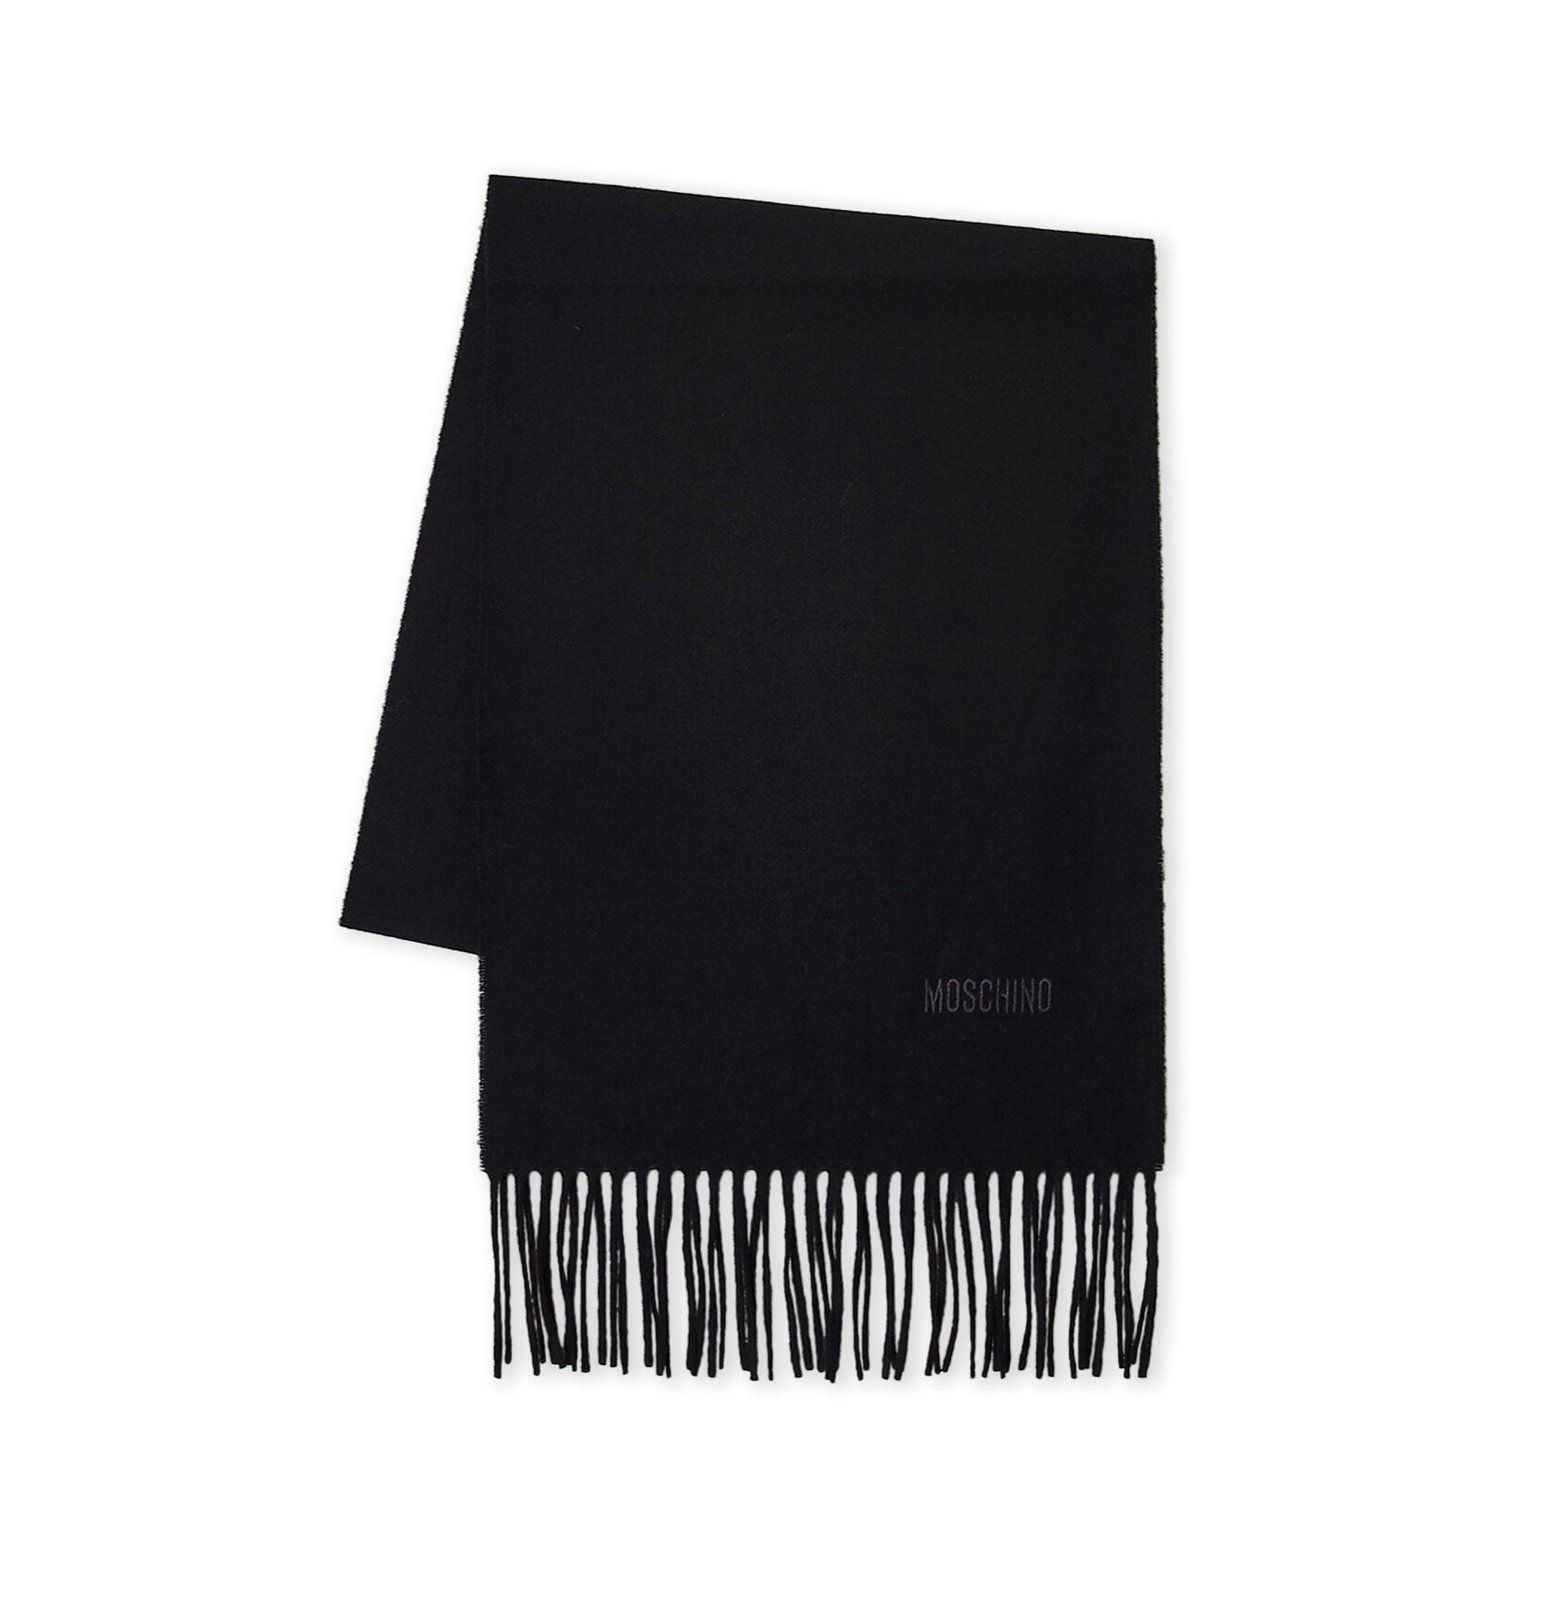 Moschino Logo Fringe Merino Wool Black Scarf Made in Italy MSRP: $125. ...